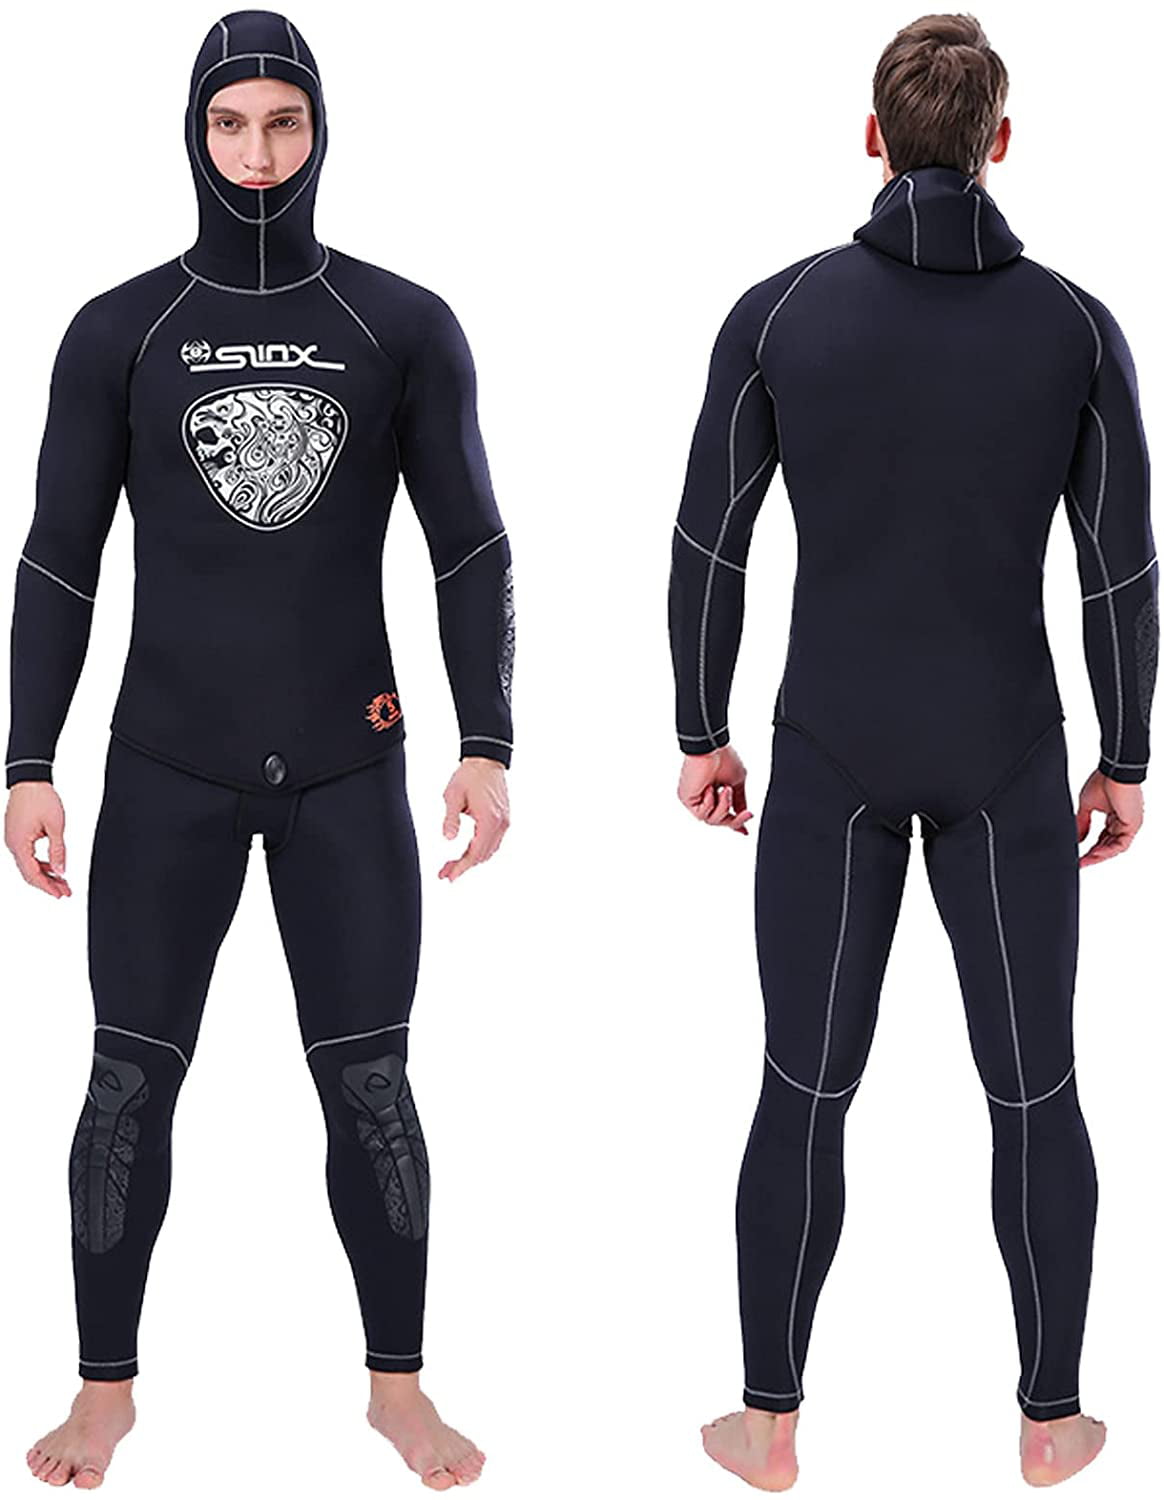 CHLZYD Men 5mm Neoprene Thermal Wetsuits Scuba 2 Pieces Swim Suit Jackets Pants Surfing Diving Snorkeling 